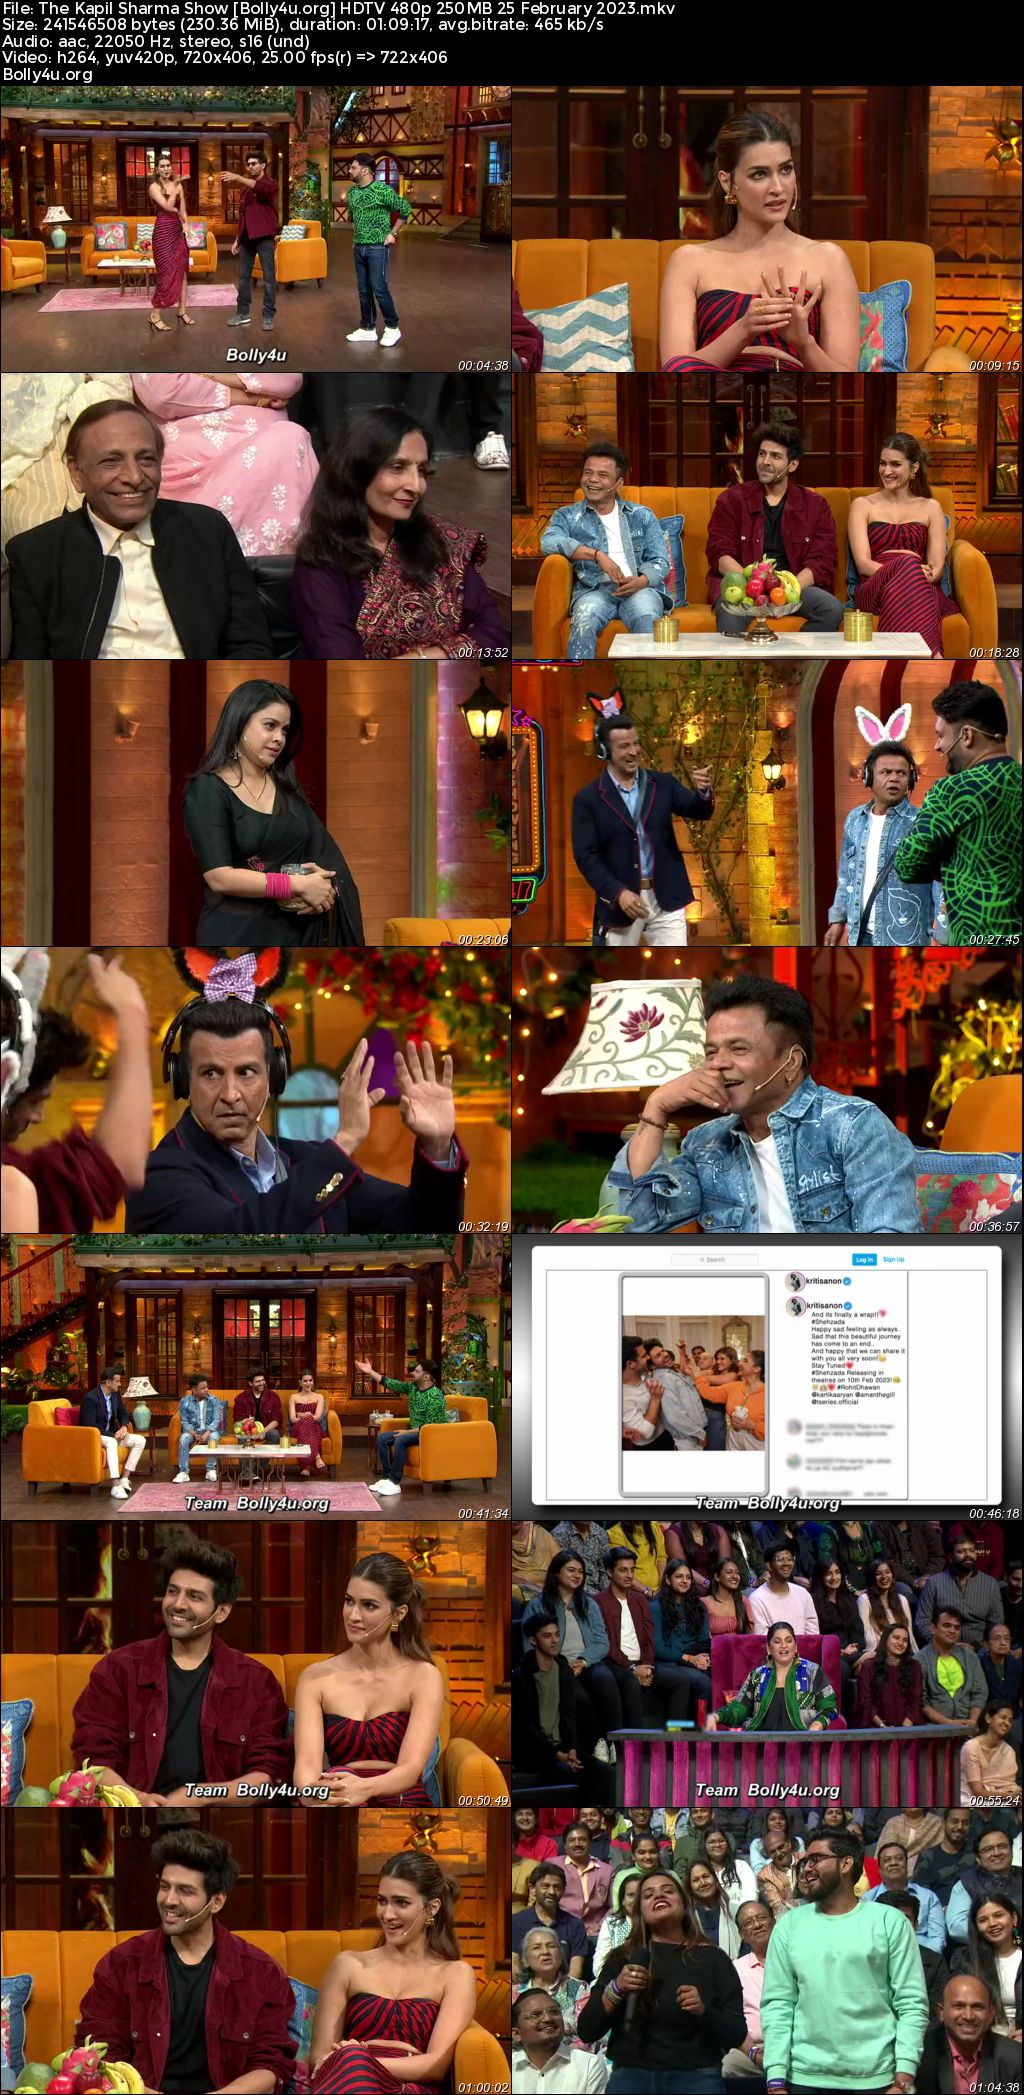 The Kapil Sharma Show HDTV 480p 250MB 25 February 2023 Download